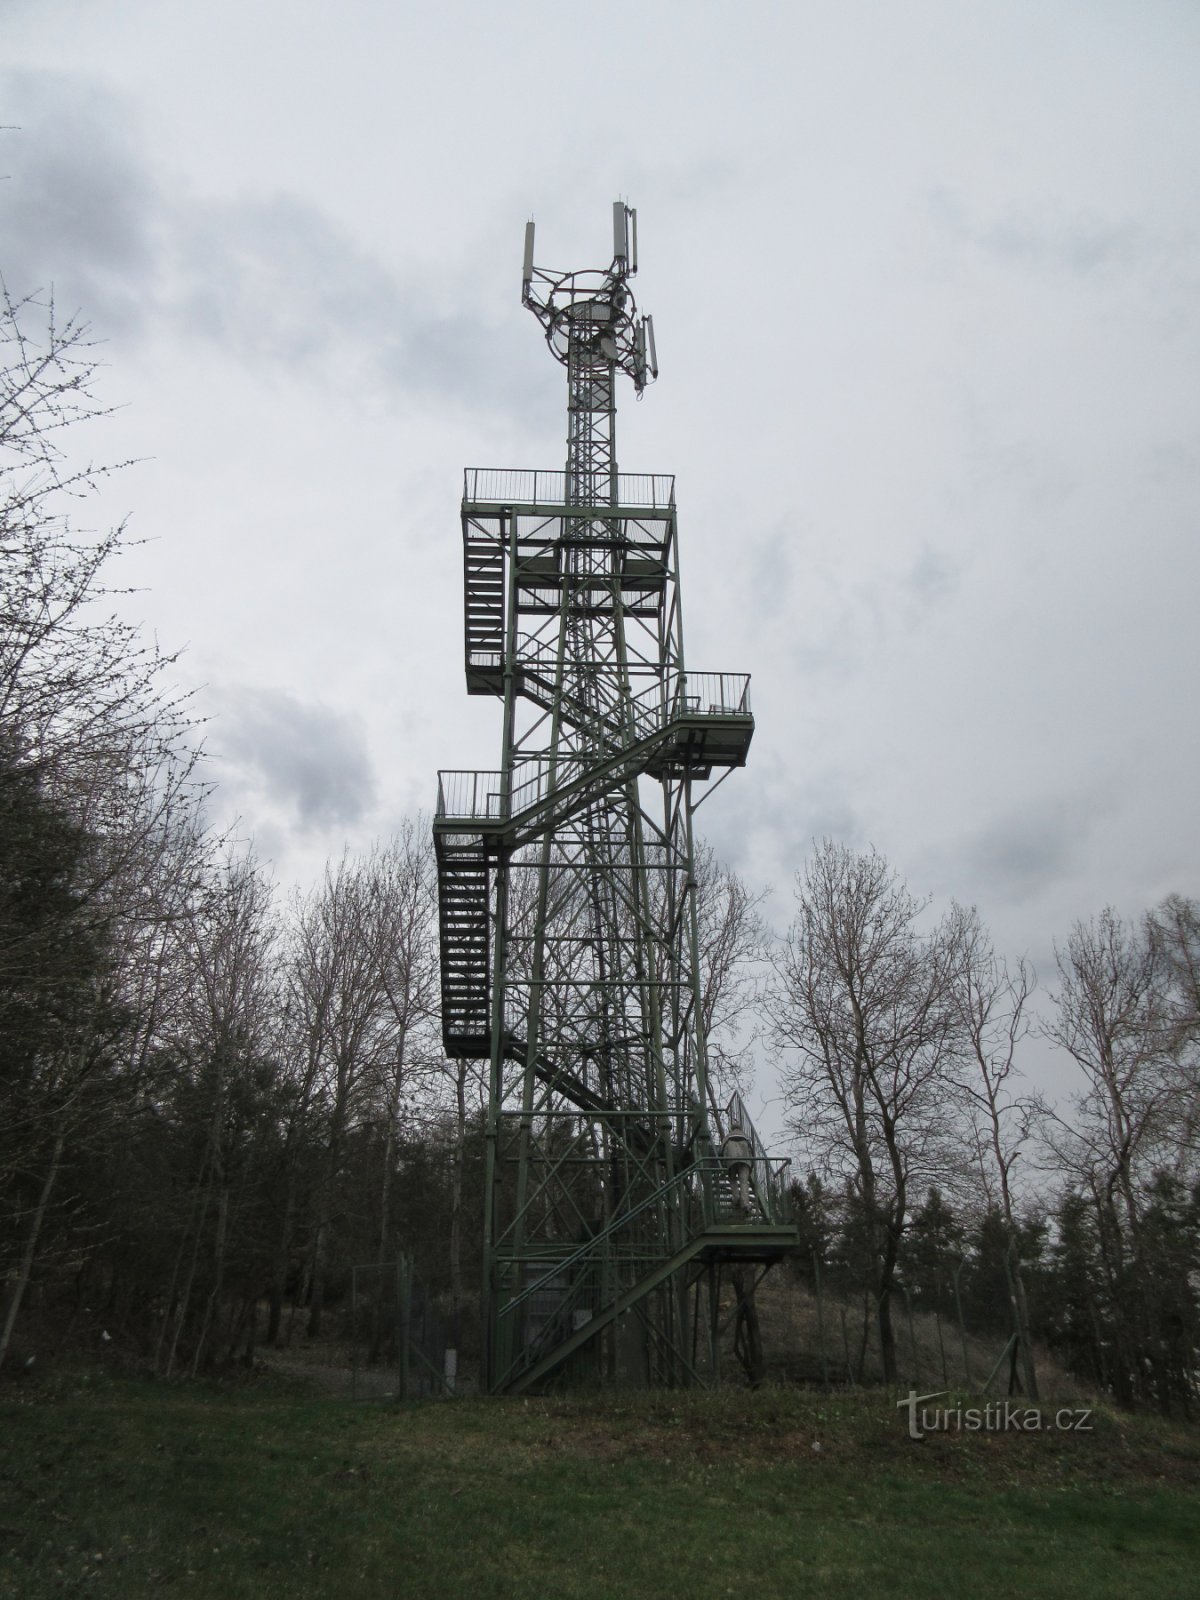 Cerhovice - оглядова вежа Třenicá hora